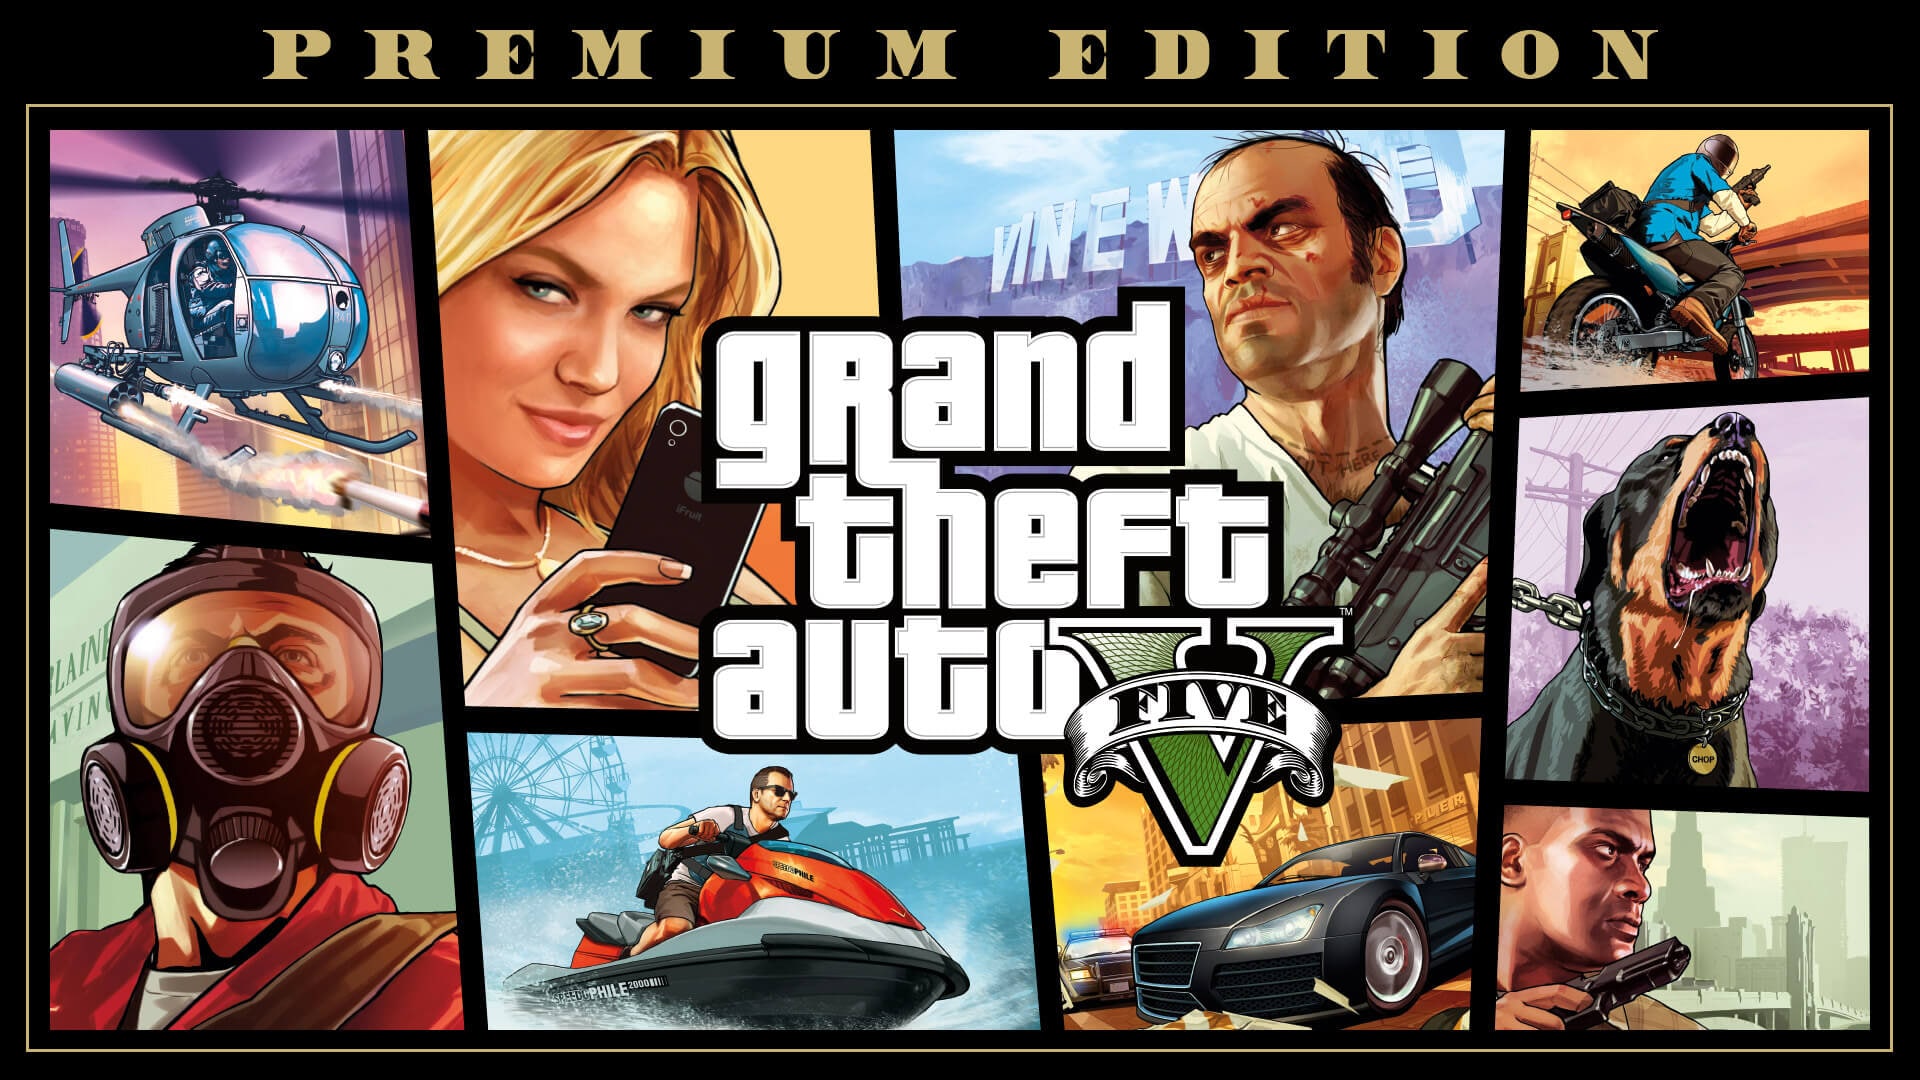 GTA V Premium Edition (GTA 5) ลิขสิทธิ์แท้ เล่น Fime M ได้ - GTA V STEAM, EpicGames, Rockstar Key - GTA V แท้ ราคาถูก - GTA V PC - GTA V ไฟM ได้ - รหัส GTA V - คีย์ GTA V